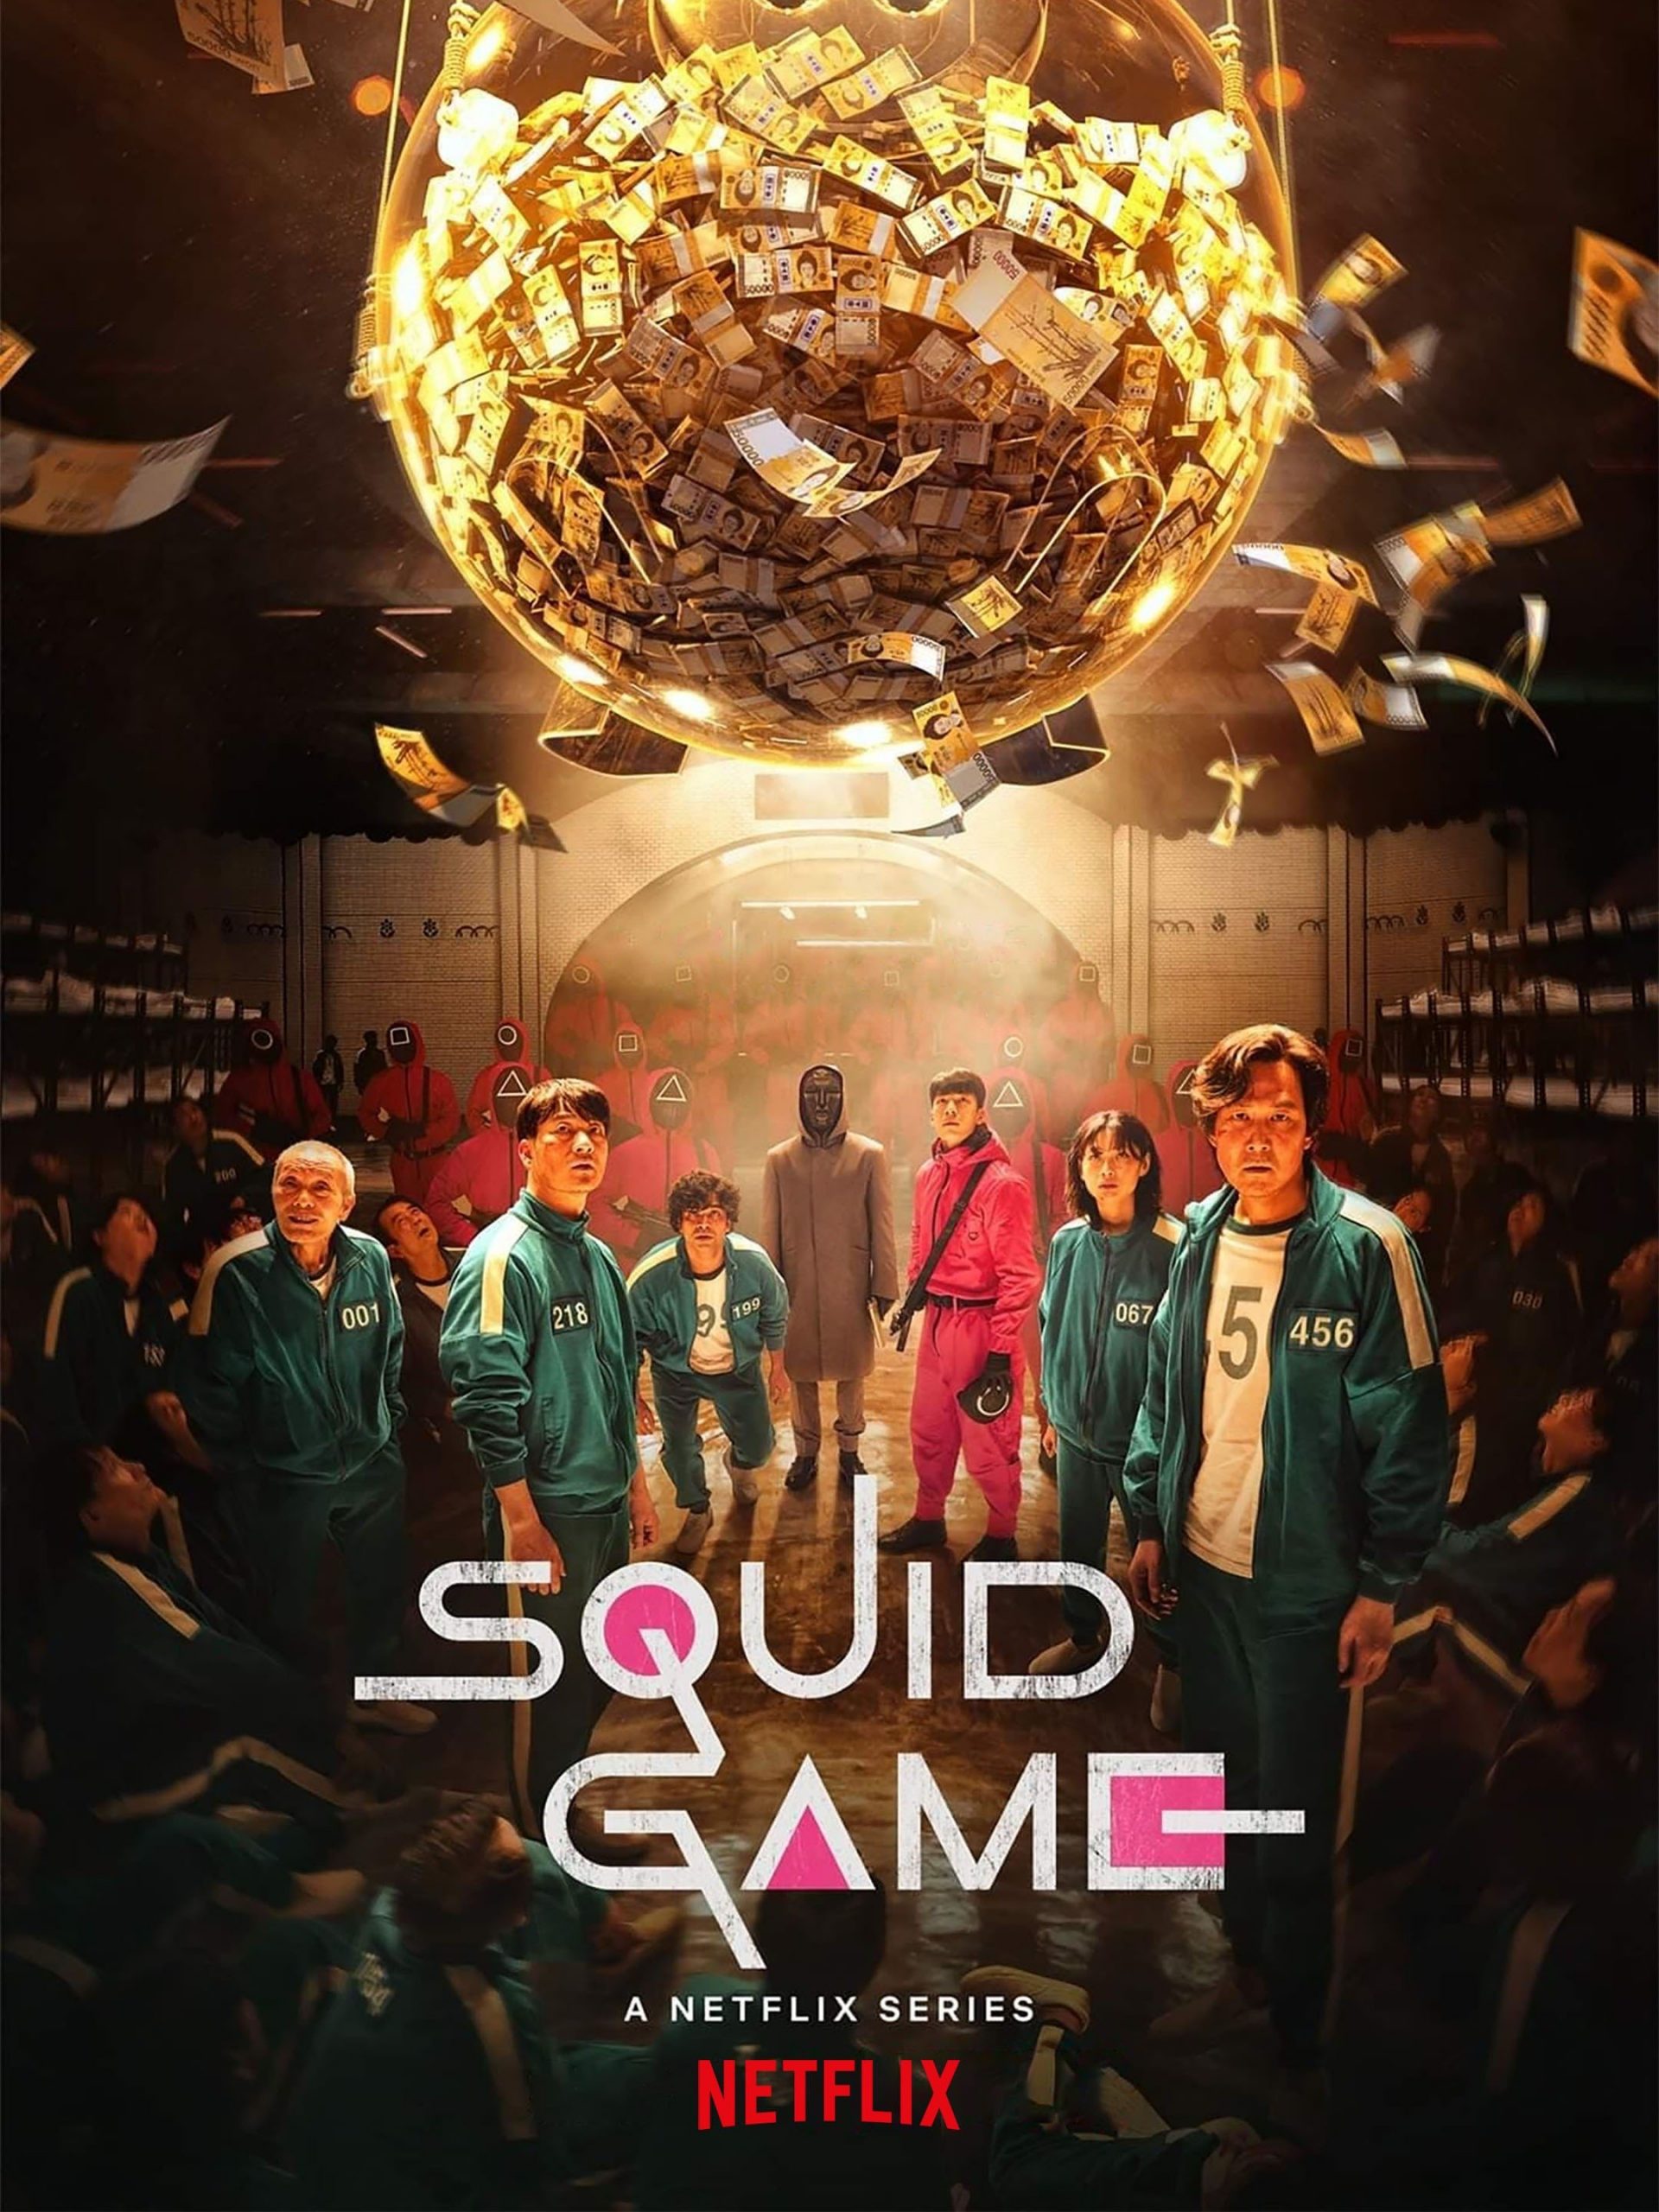 Squid game season 2